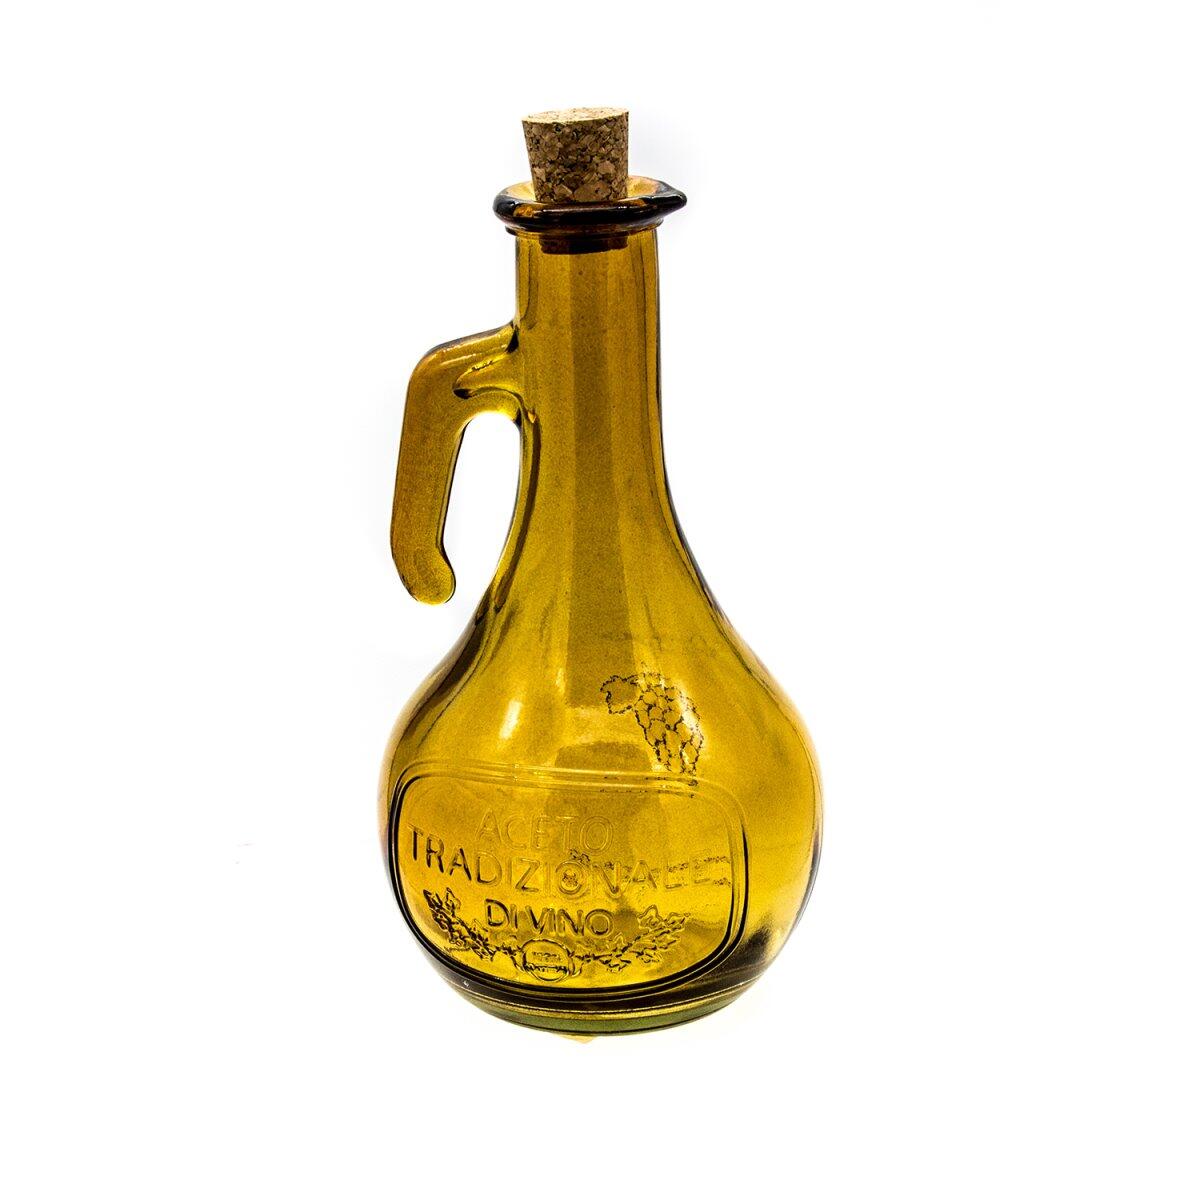 Sanmiguel Aceto Oil Bottle with Handle 500 cc